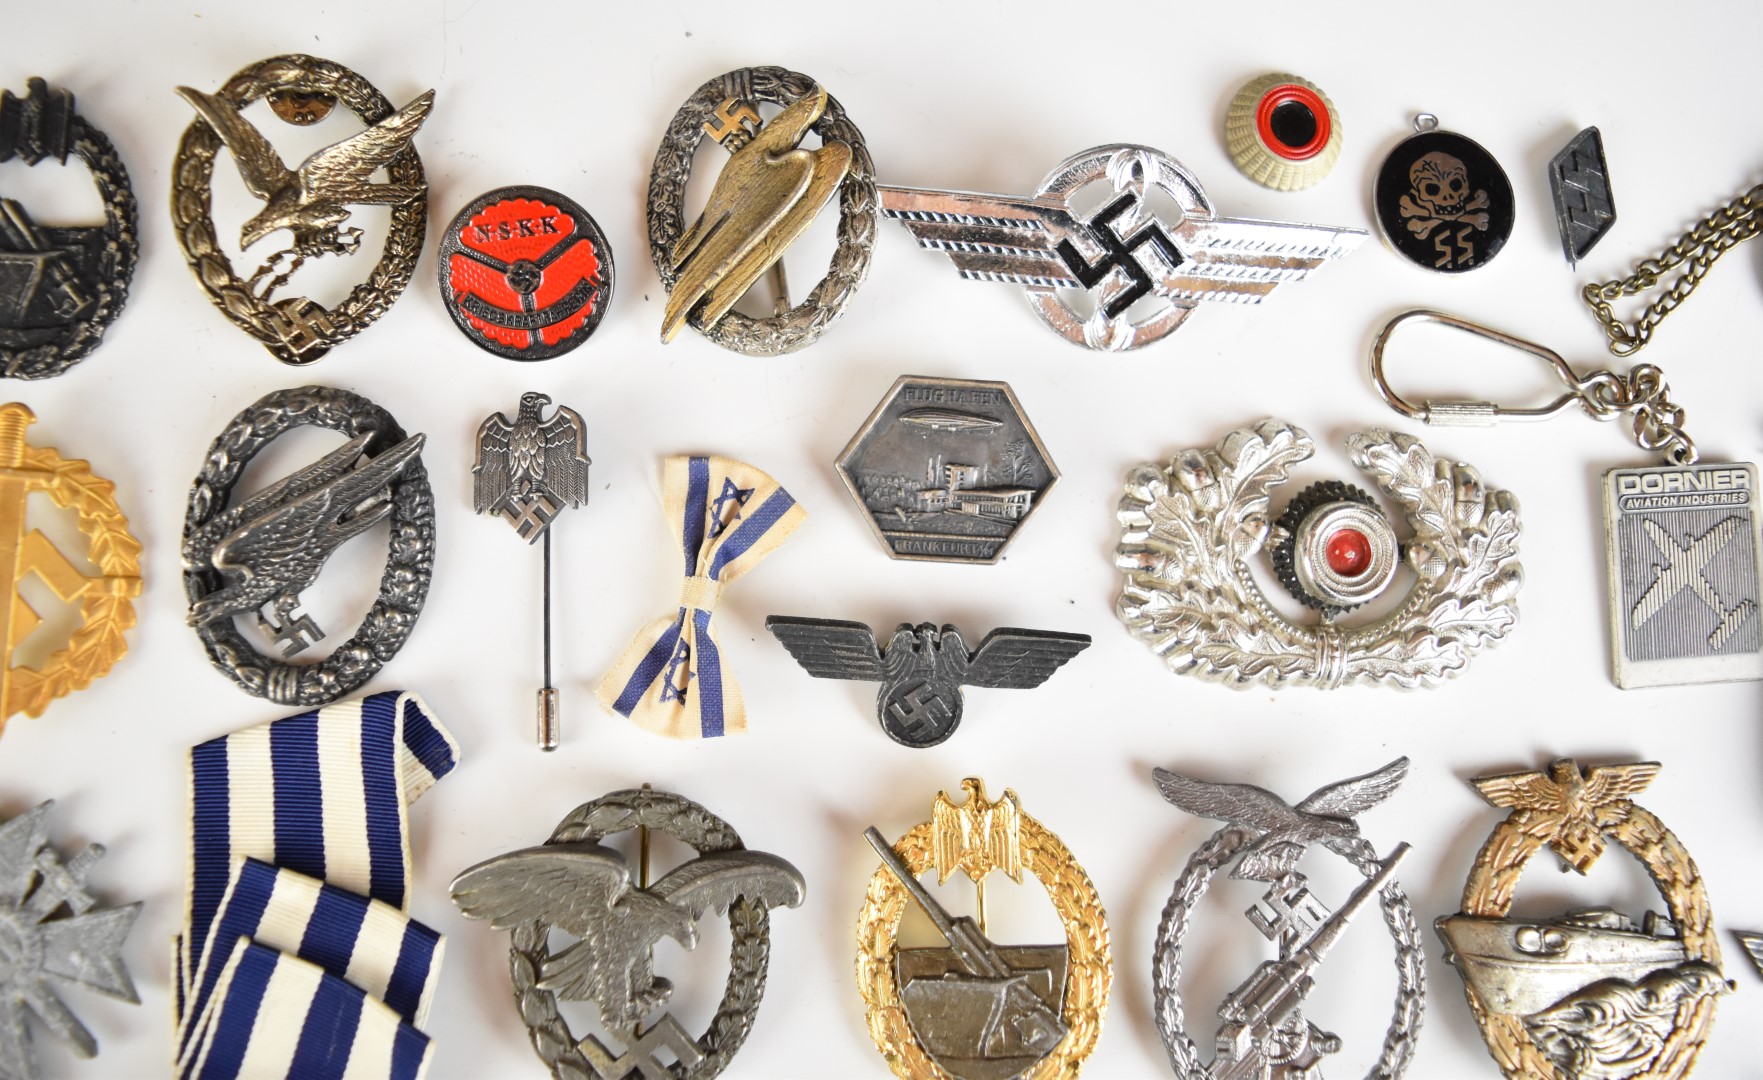 Replica German WW2 Nazi Third Reich badges, insignia and medals including High Seas Fleet, Artillery - Image 7 of 16